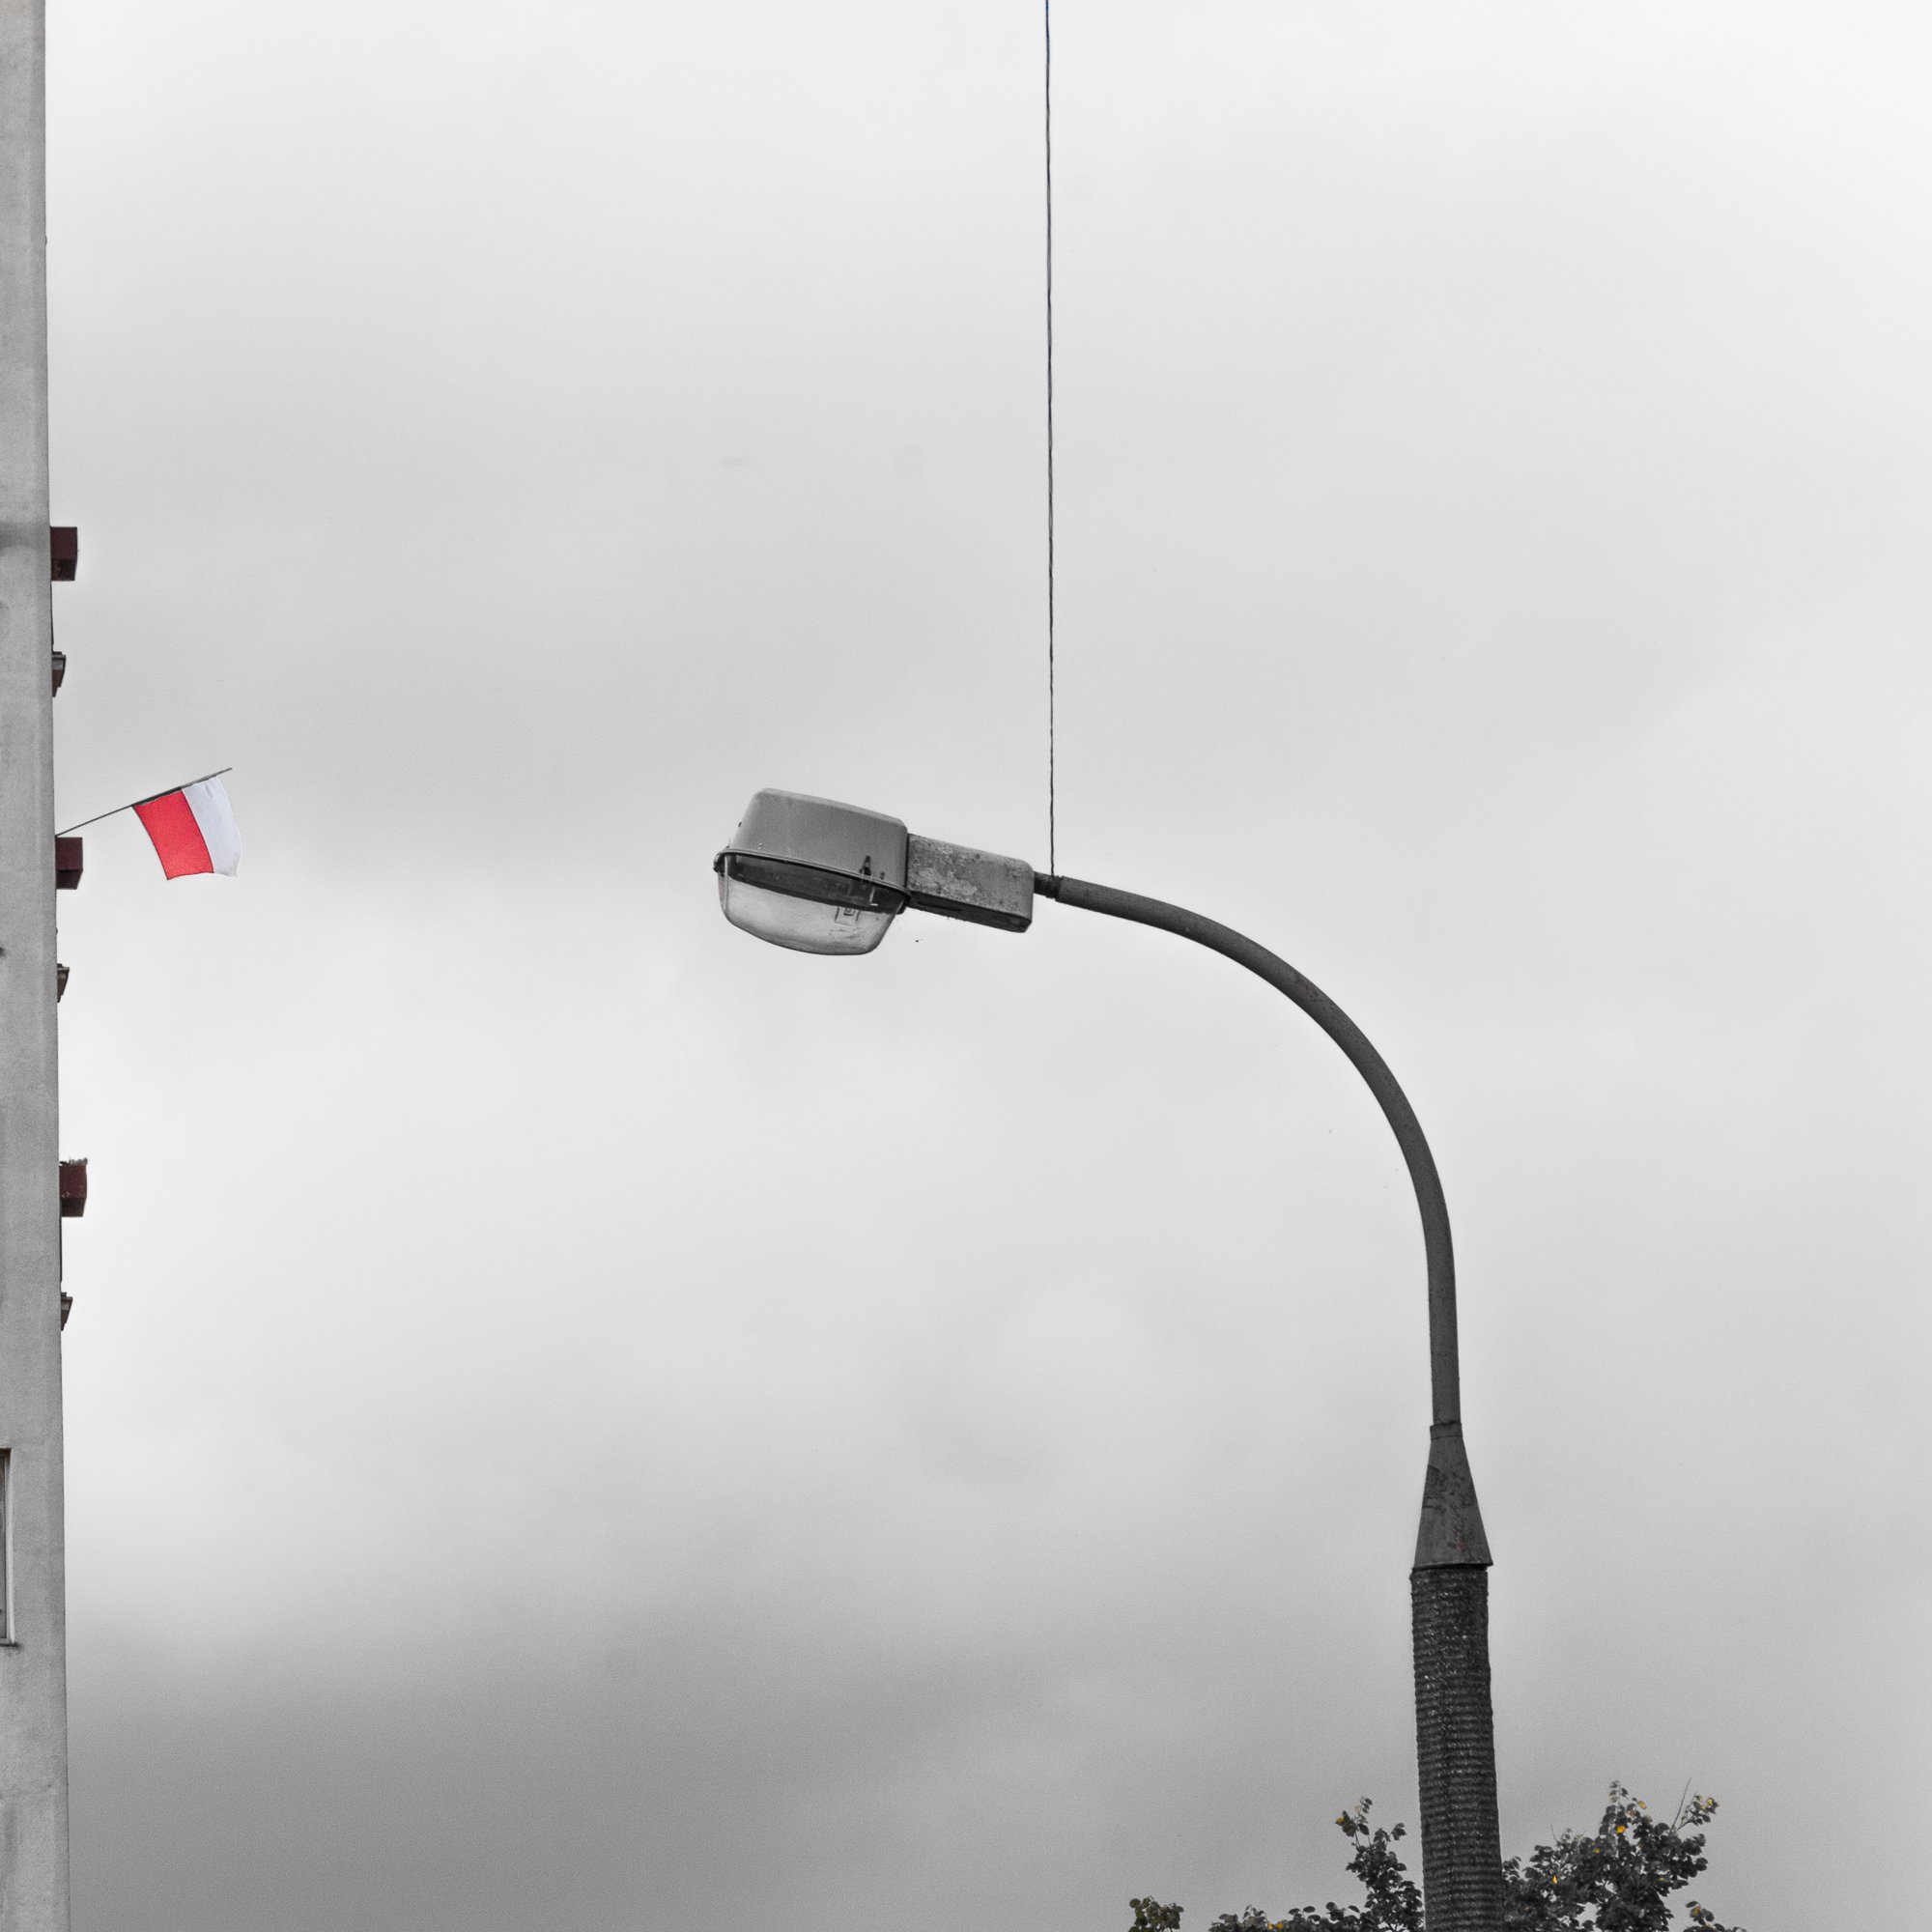 Adam Mazek Photography. Warsaw (Warszawa) 2017. Post: "Perspectives for my nation." Square. Polish flag. Minimalism. Death. Street lamp.